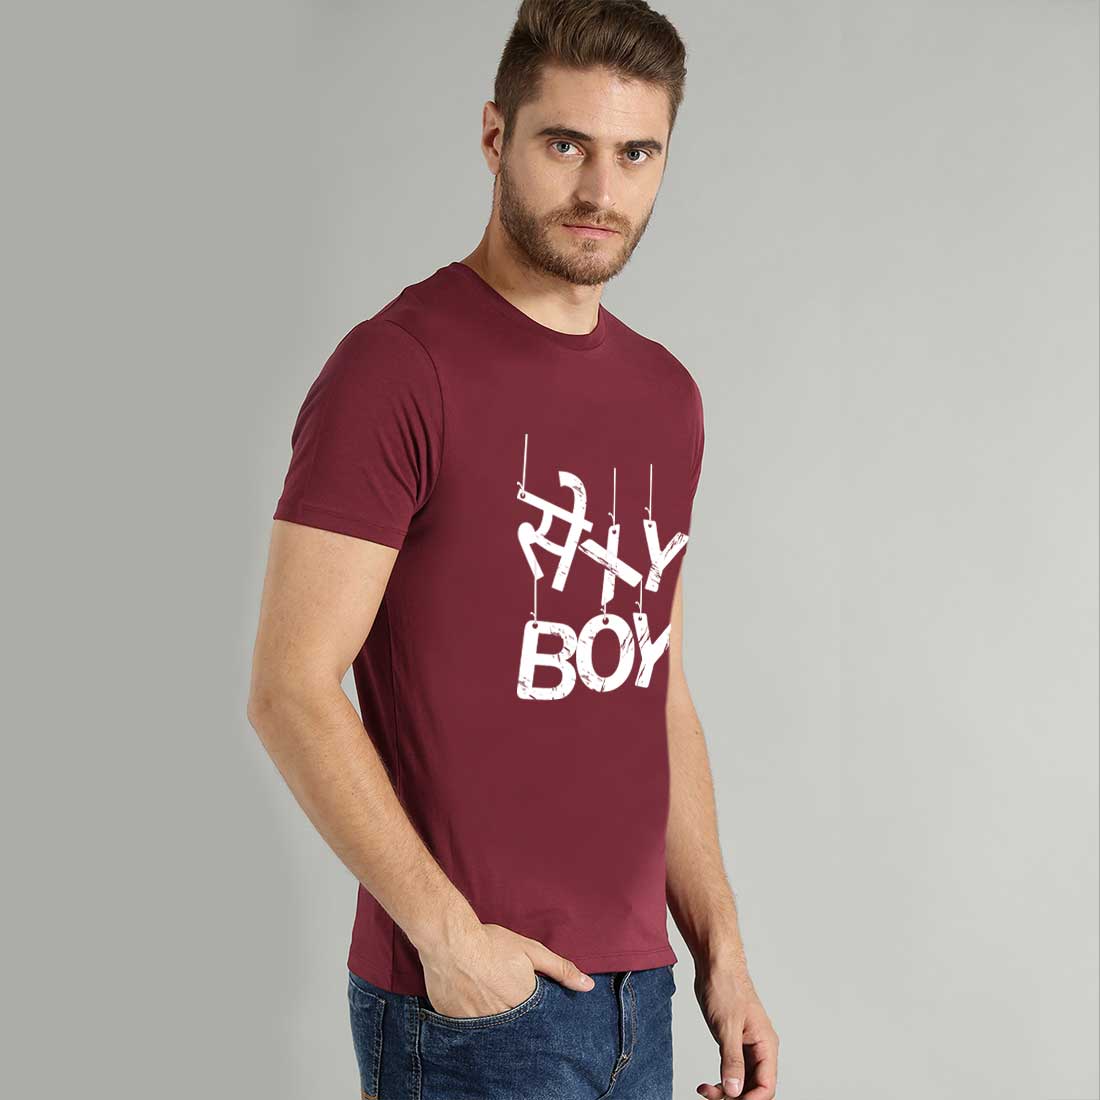 Sexy Boy Maroon Men T-Shirt